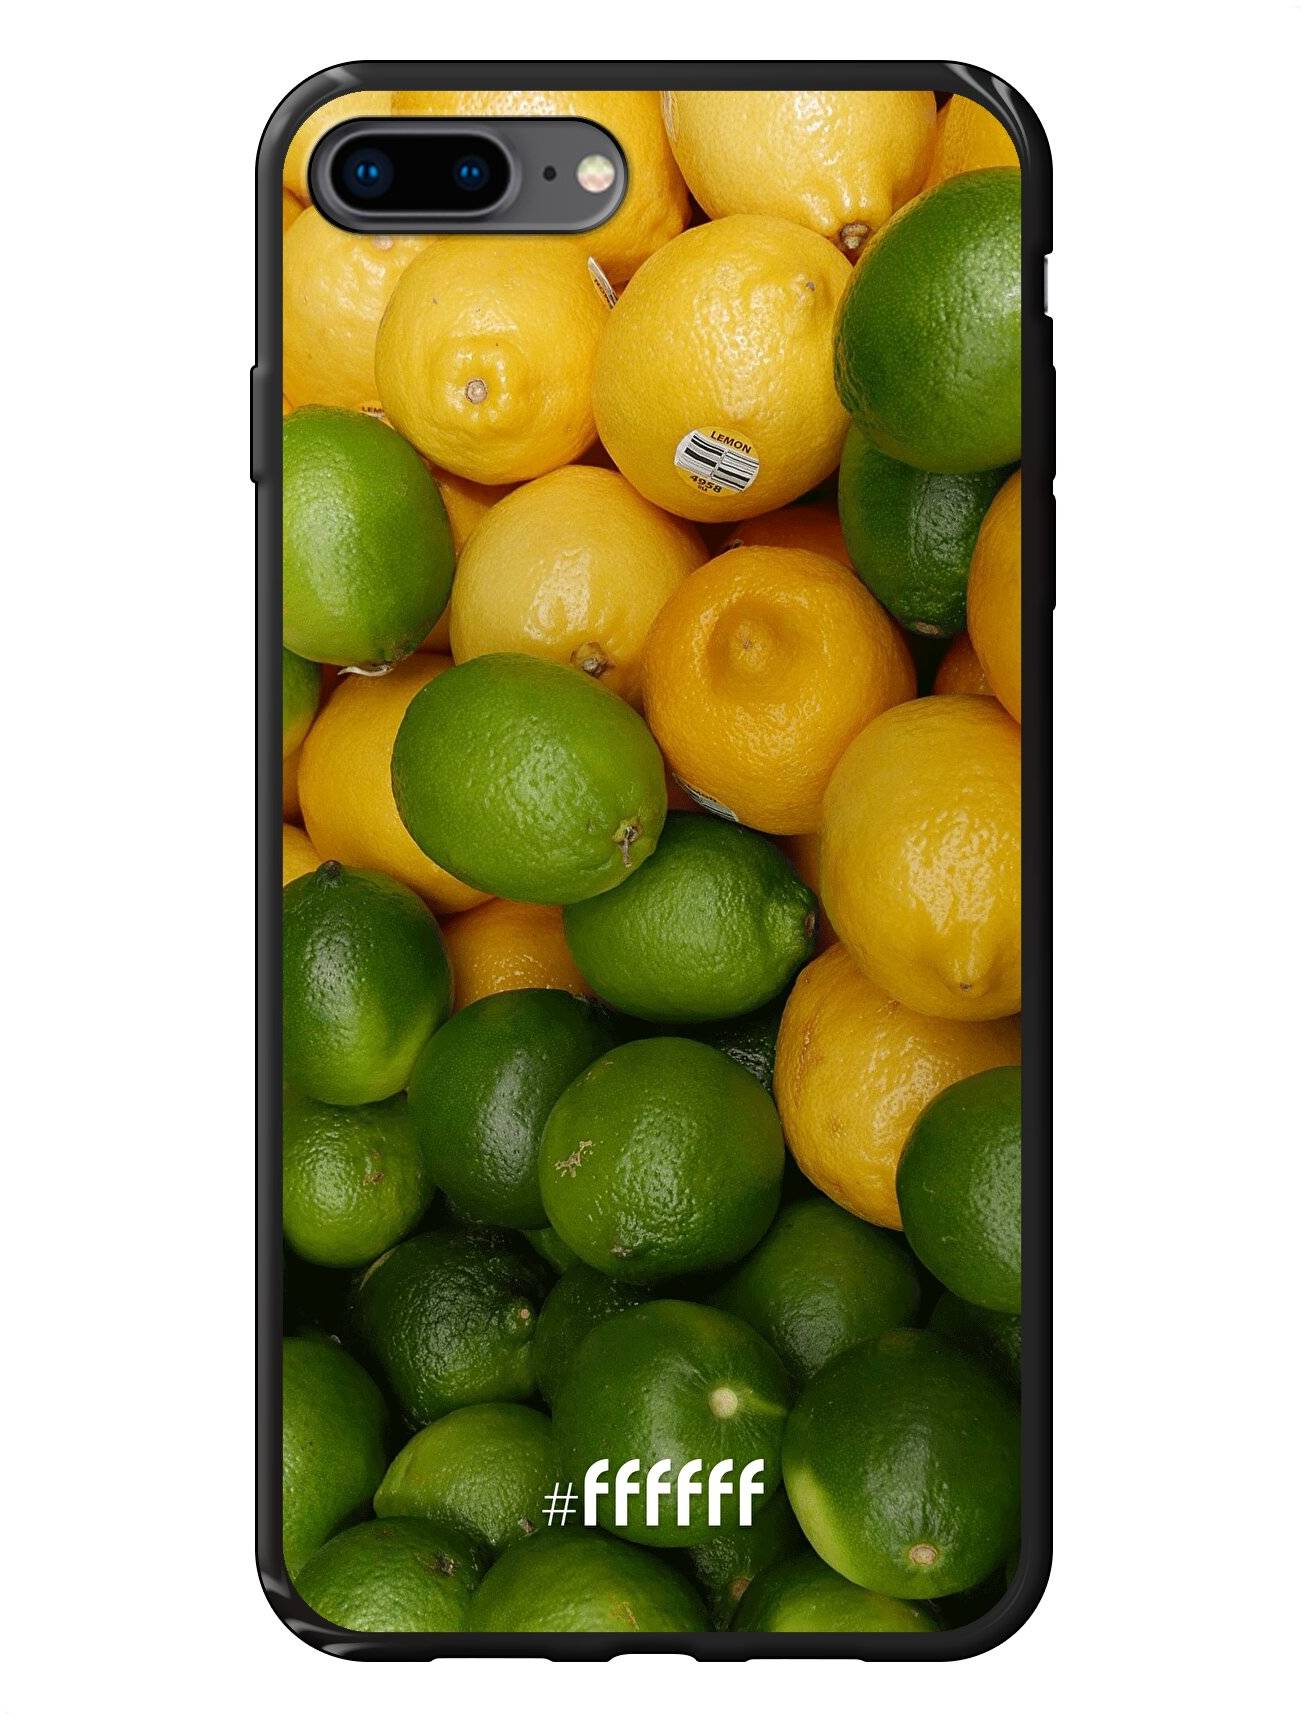 Lemon & Lime iPhone 8 Plus